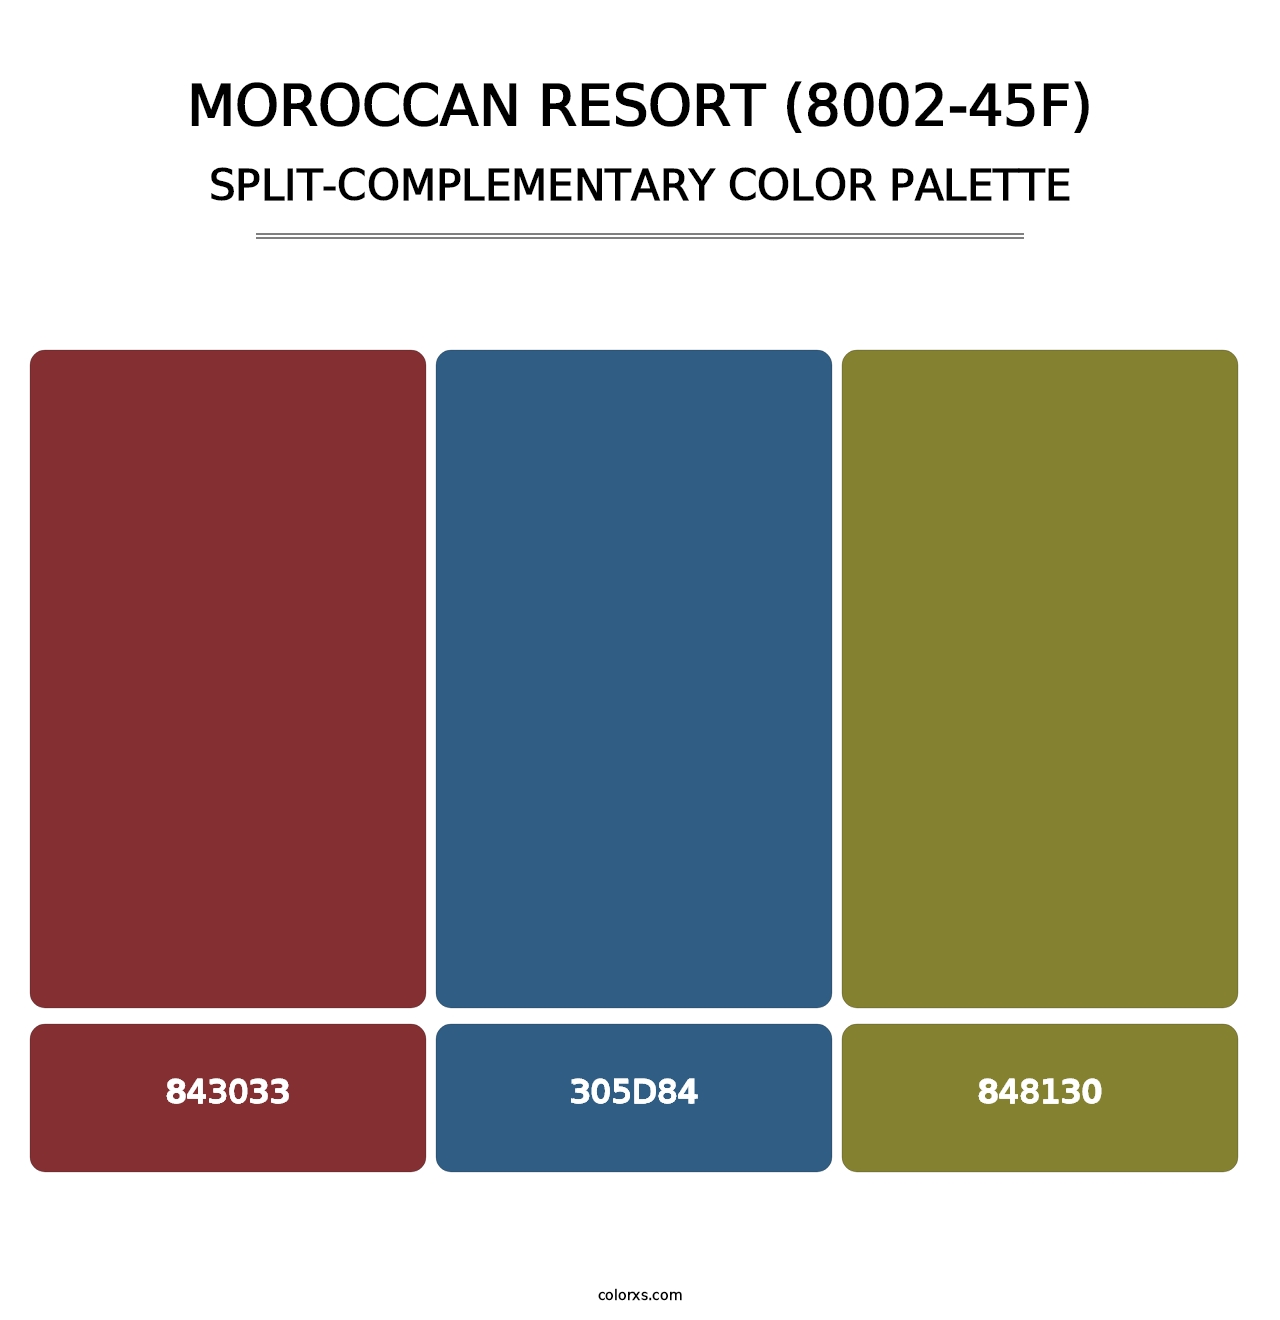 Moroccan Resort (8002-45F) - Split-Complementary Color Palette